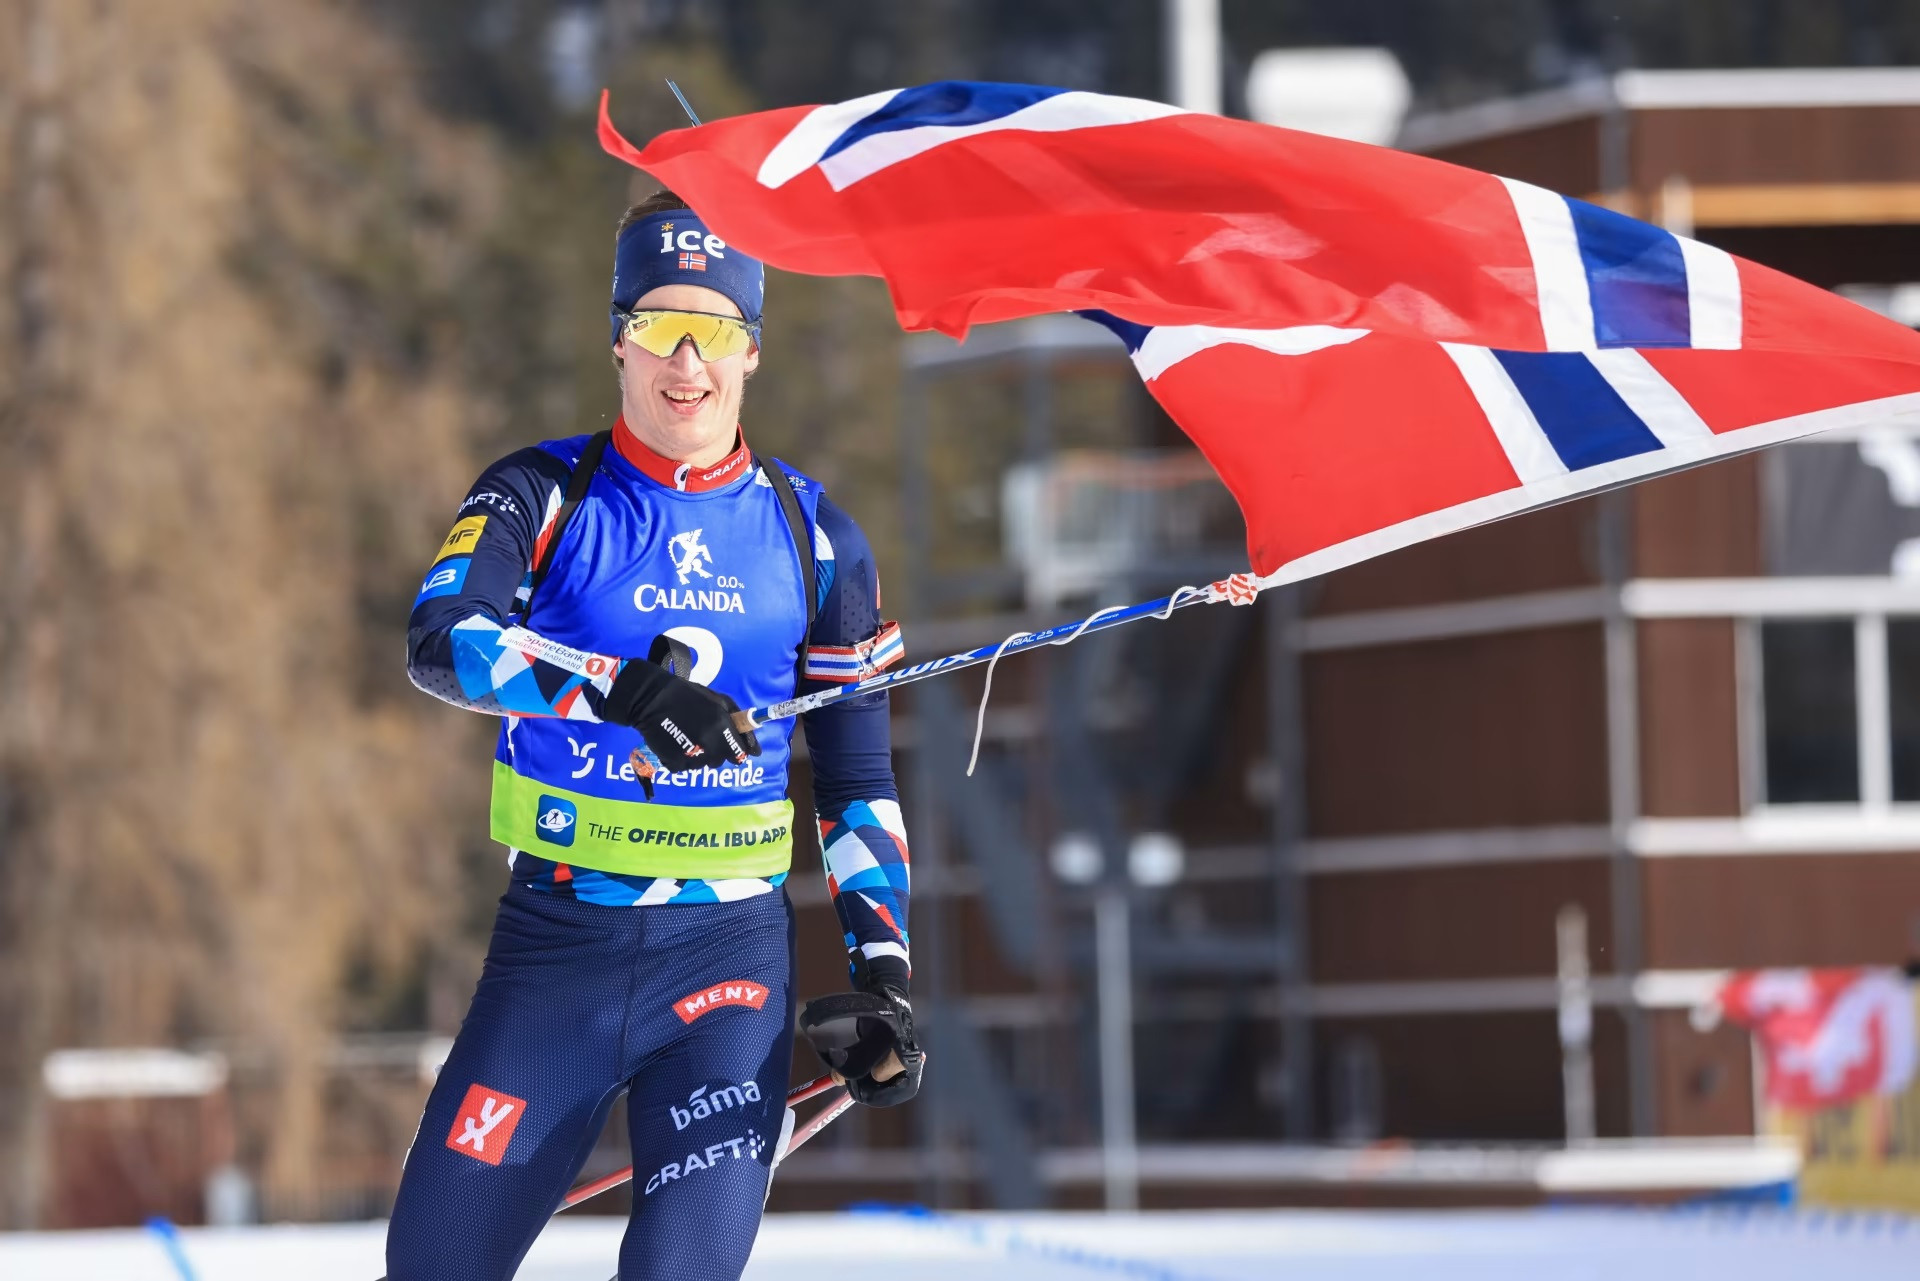 Sørum tops Norwegian pursuit podium sweep at IBU Open European Championships